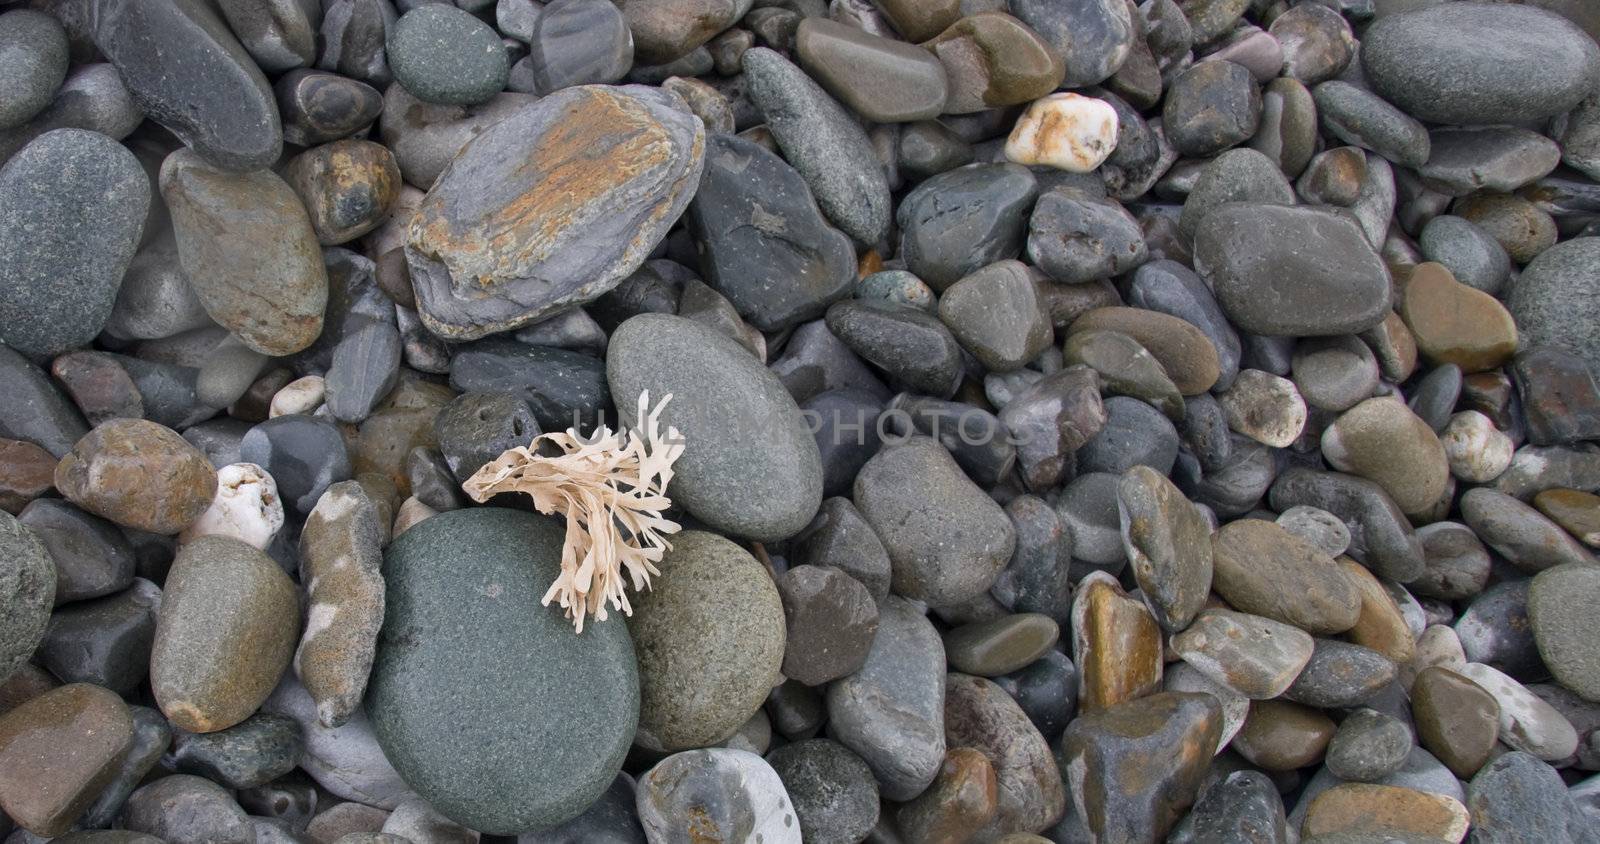 Pebbles and seaweed by groomee